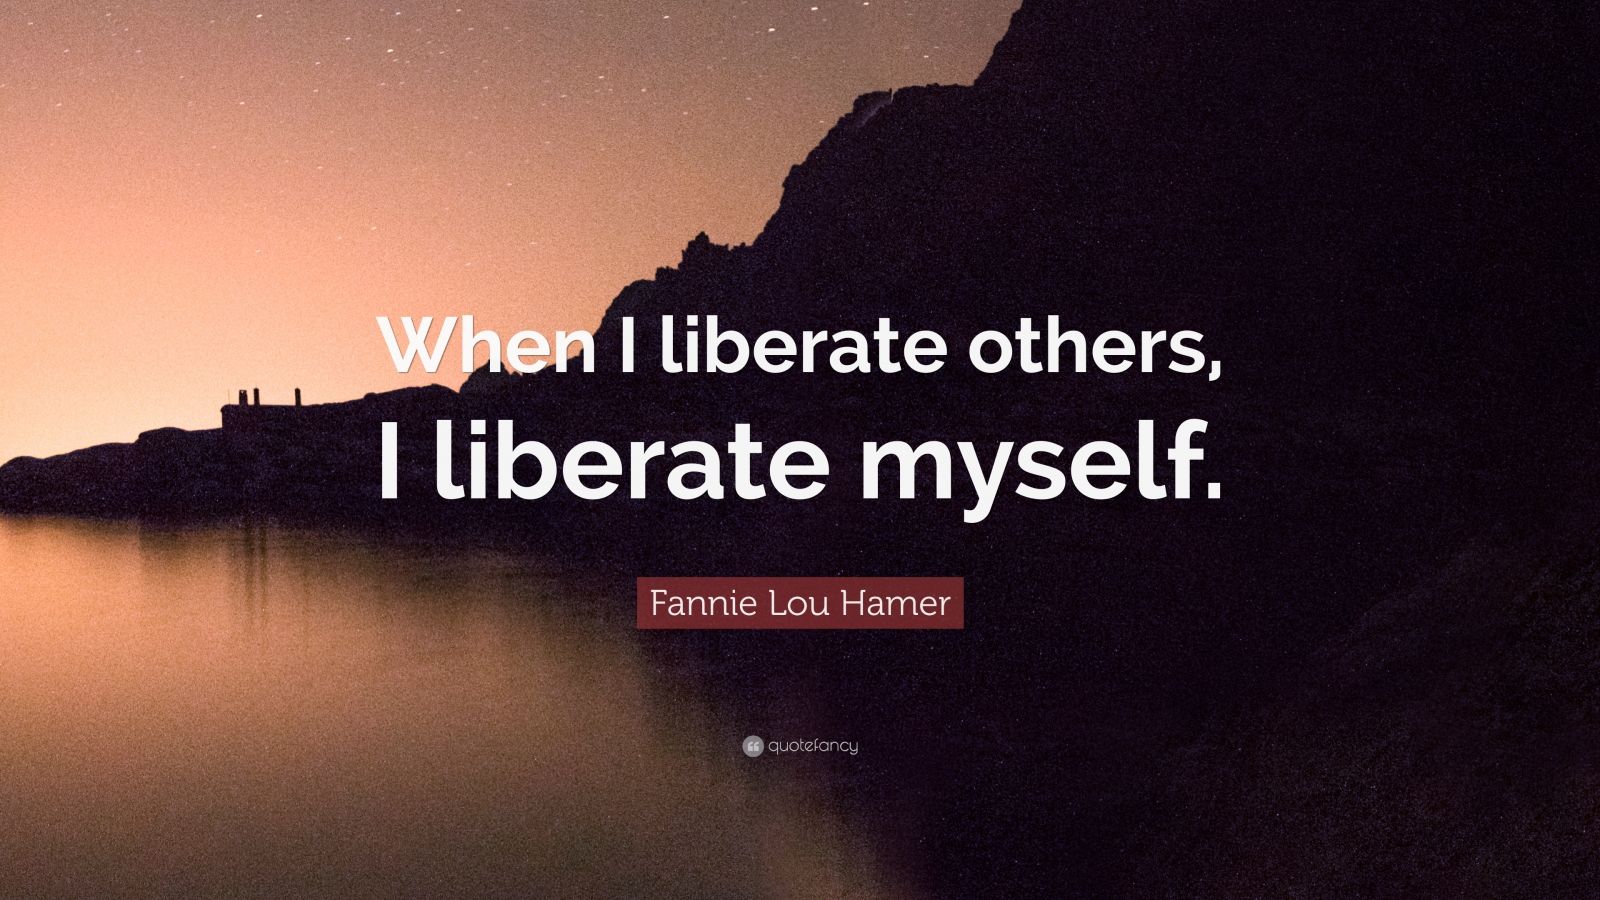 Fannie Lou Hamer Quote: “When I liberate others, I liberate myself.” (7